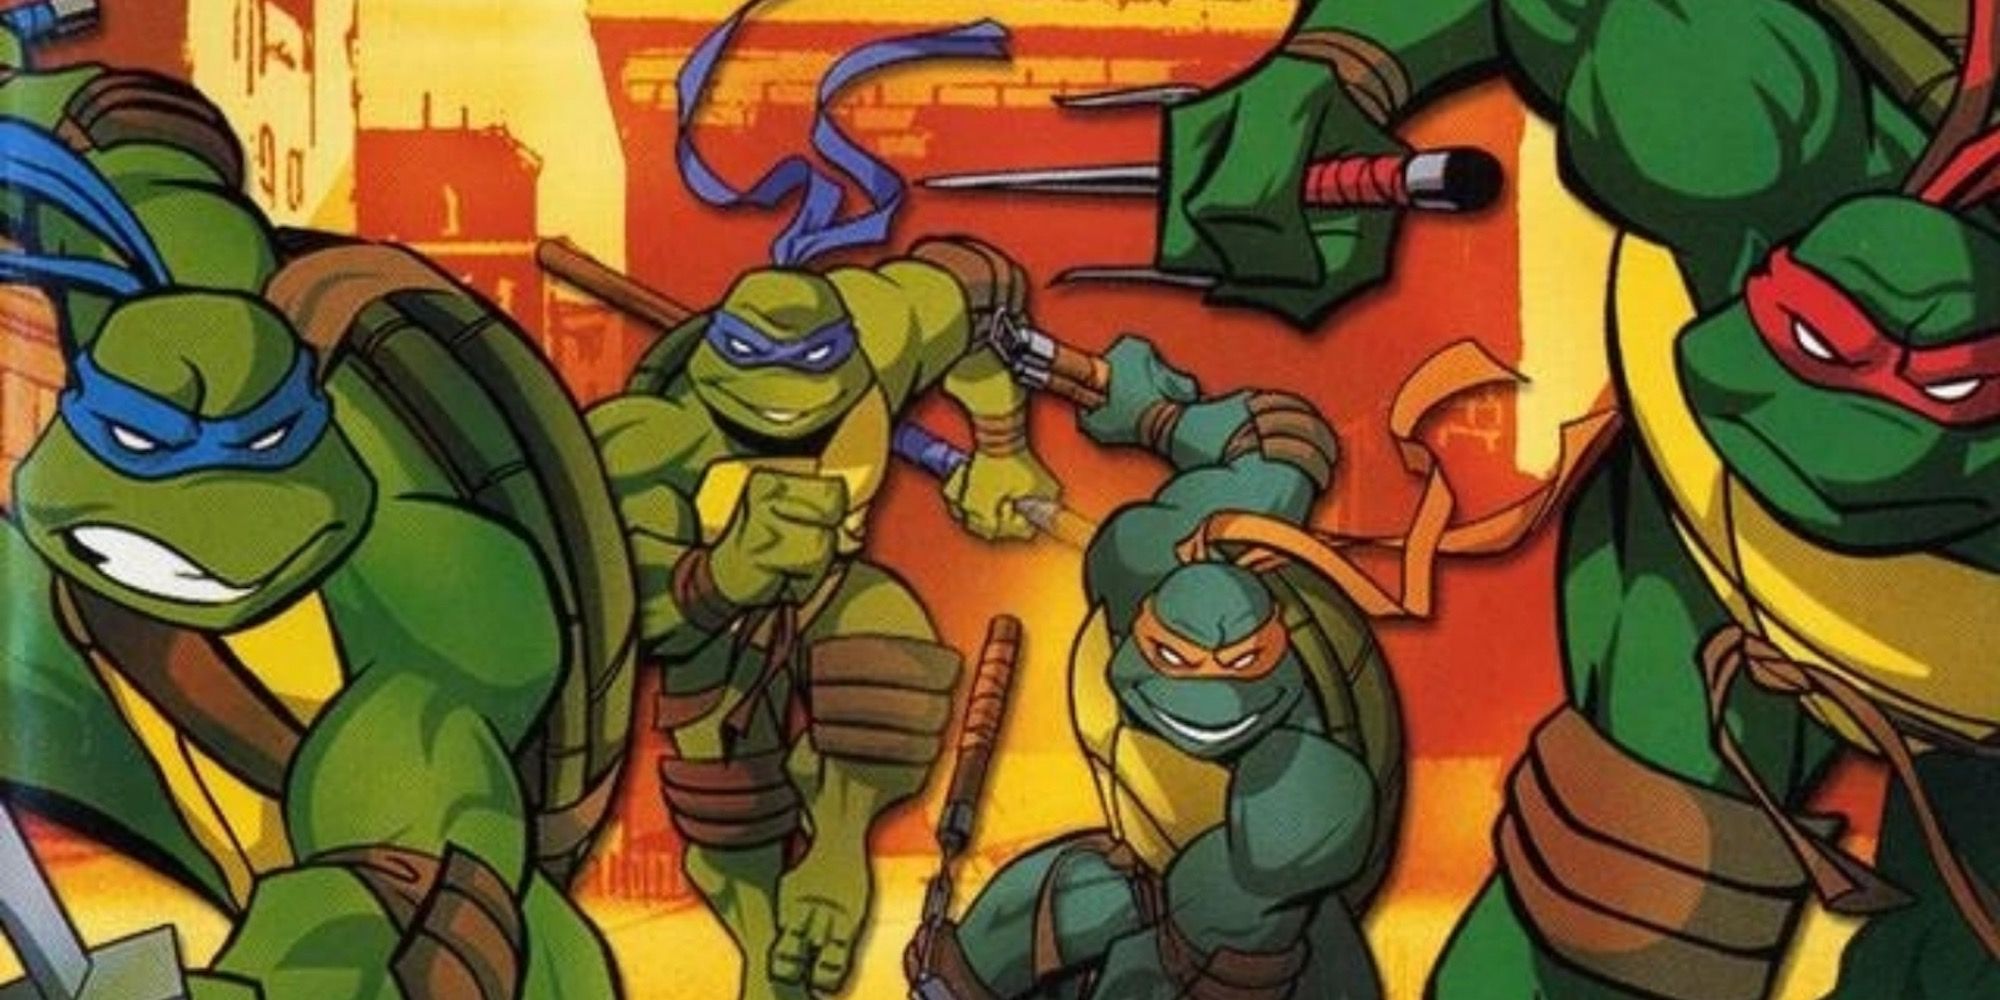 Promo art featuring characters in Teenage Mutant Ninja Turtles